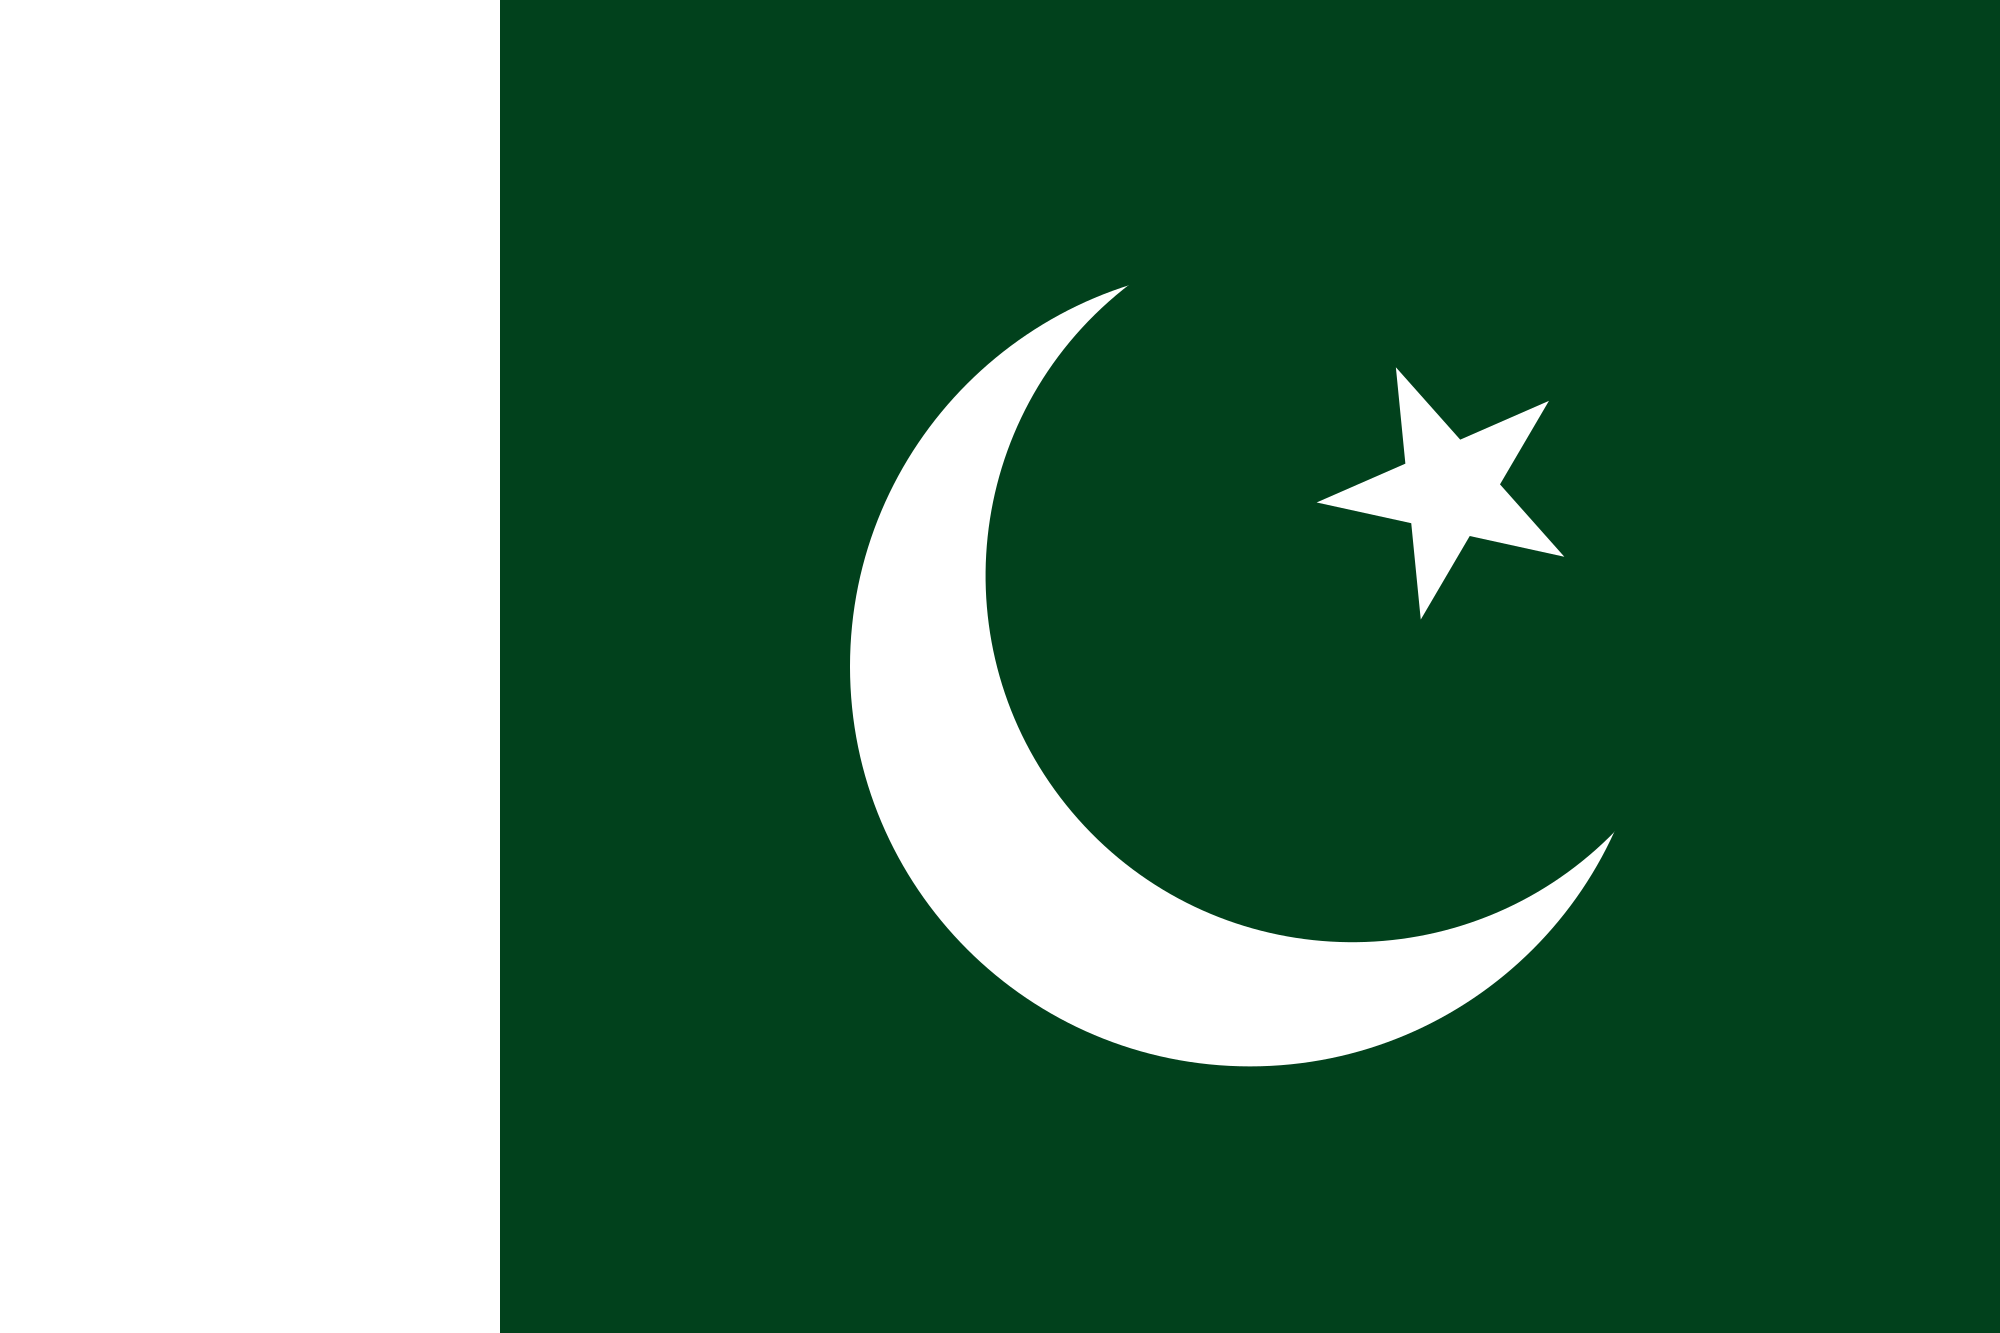 “Pakistan